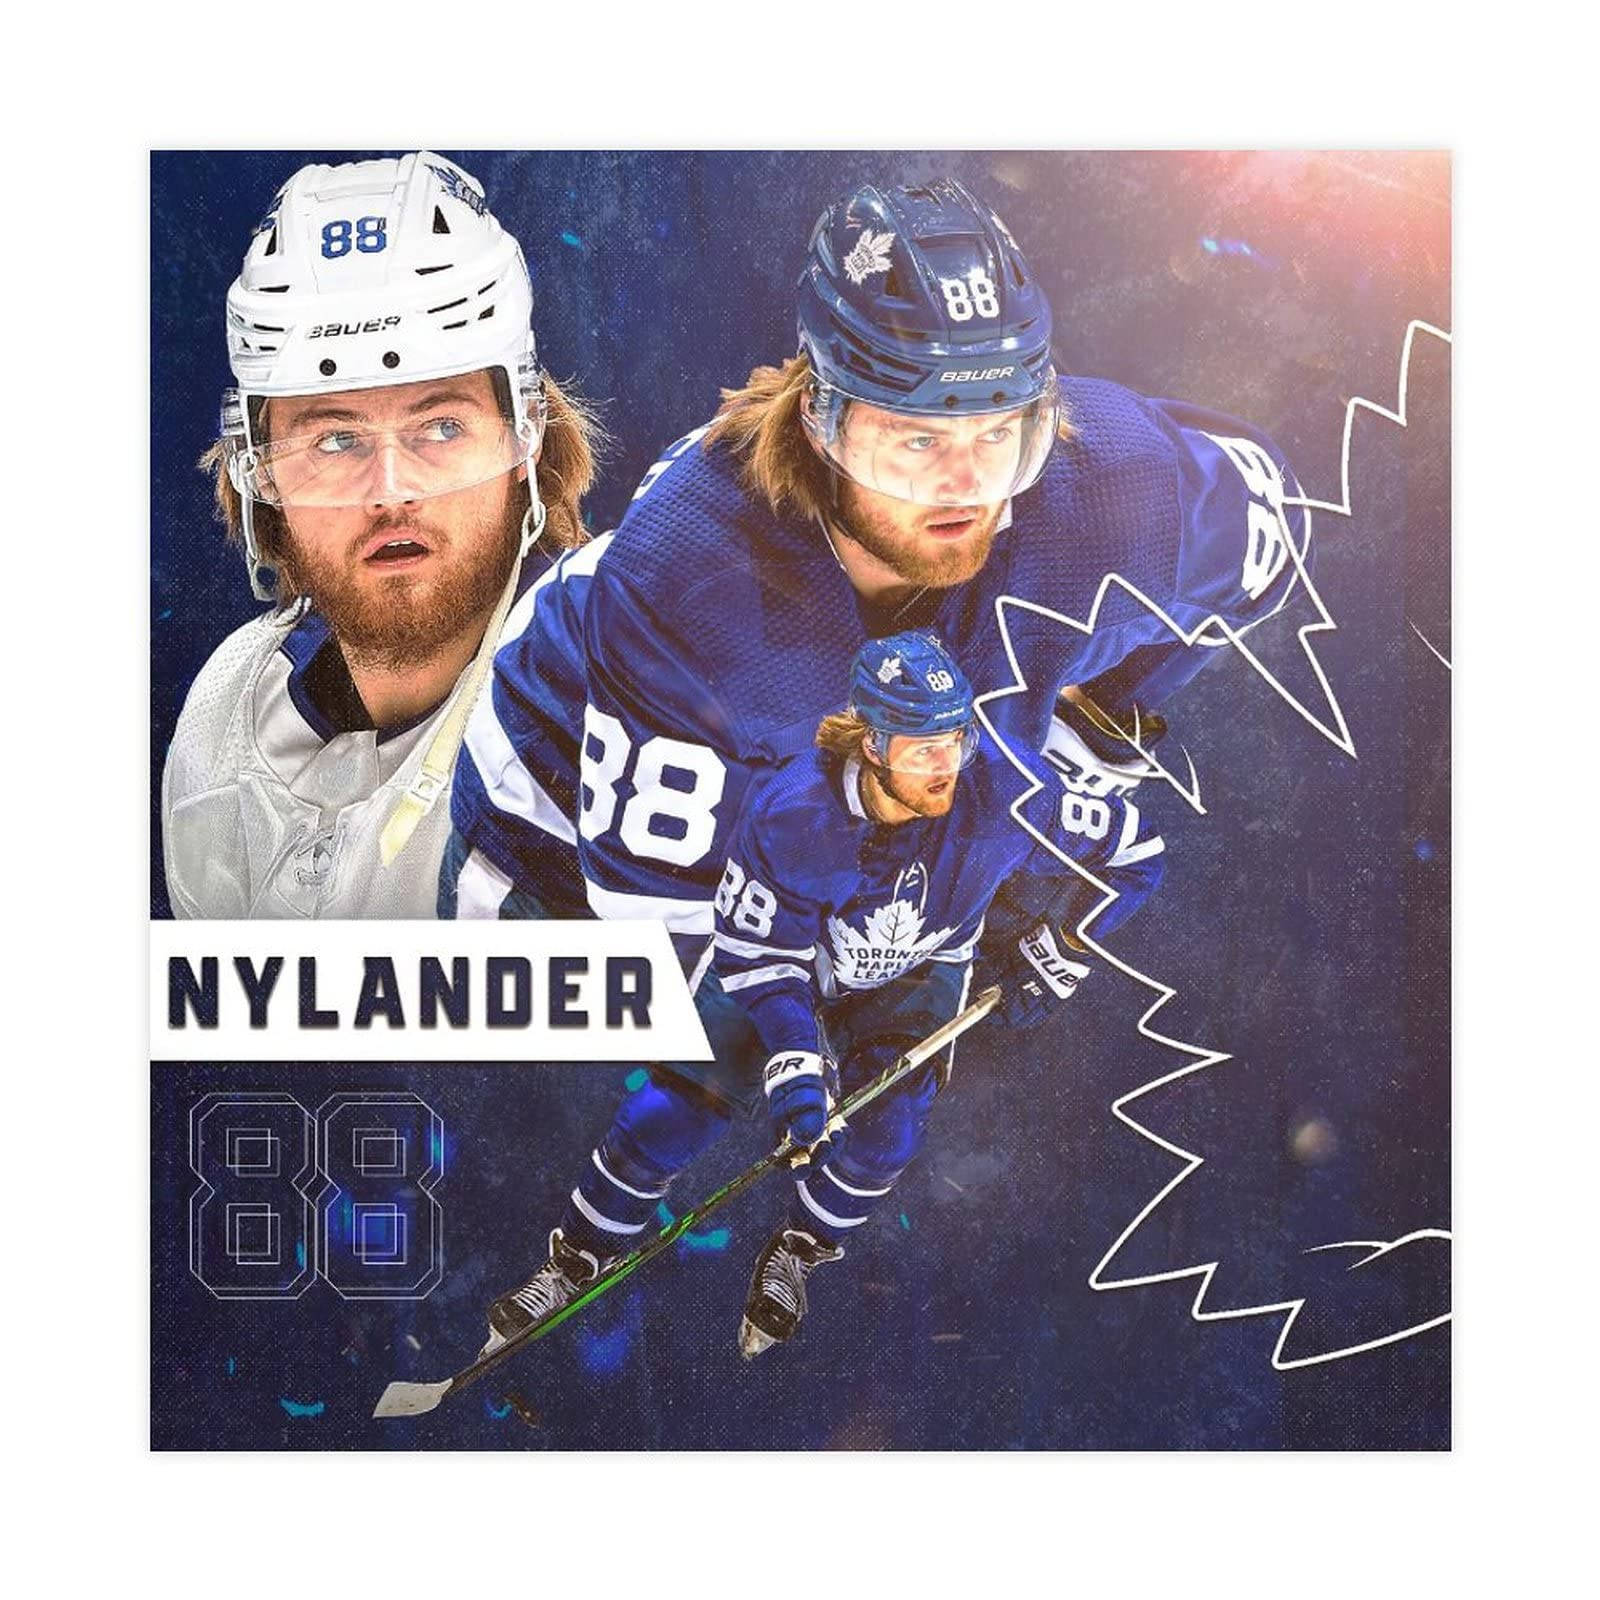 Canadian Nhl Player William Nylander Wall Art Poster Wallpaper